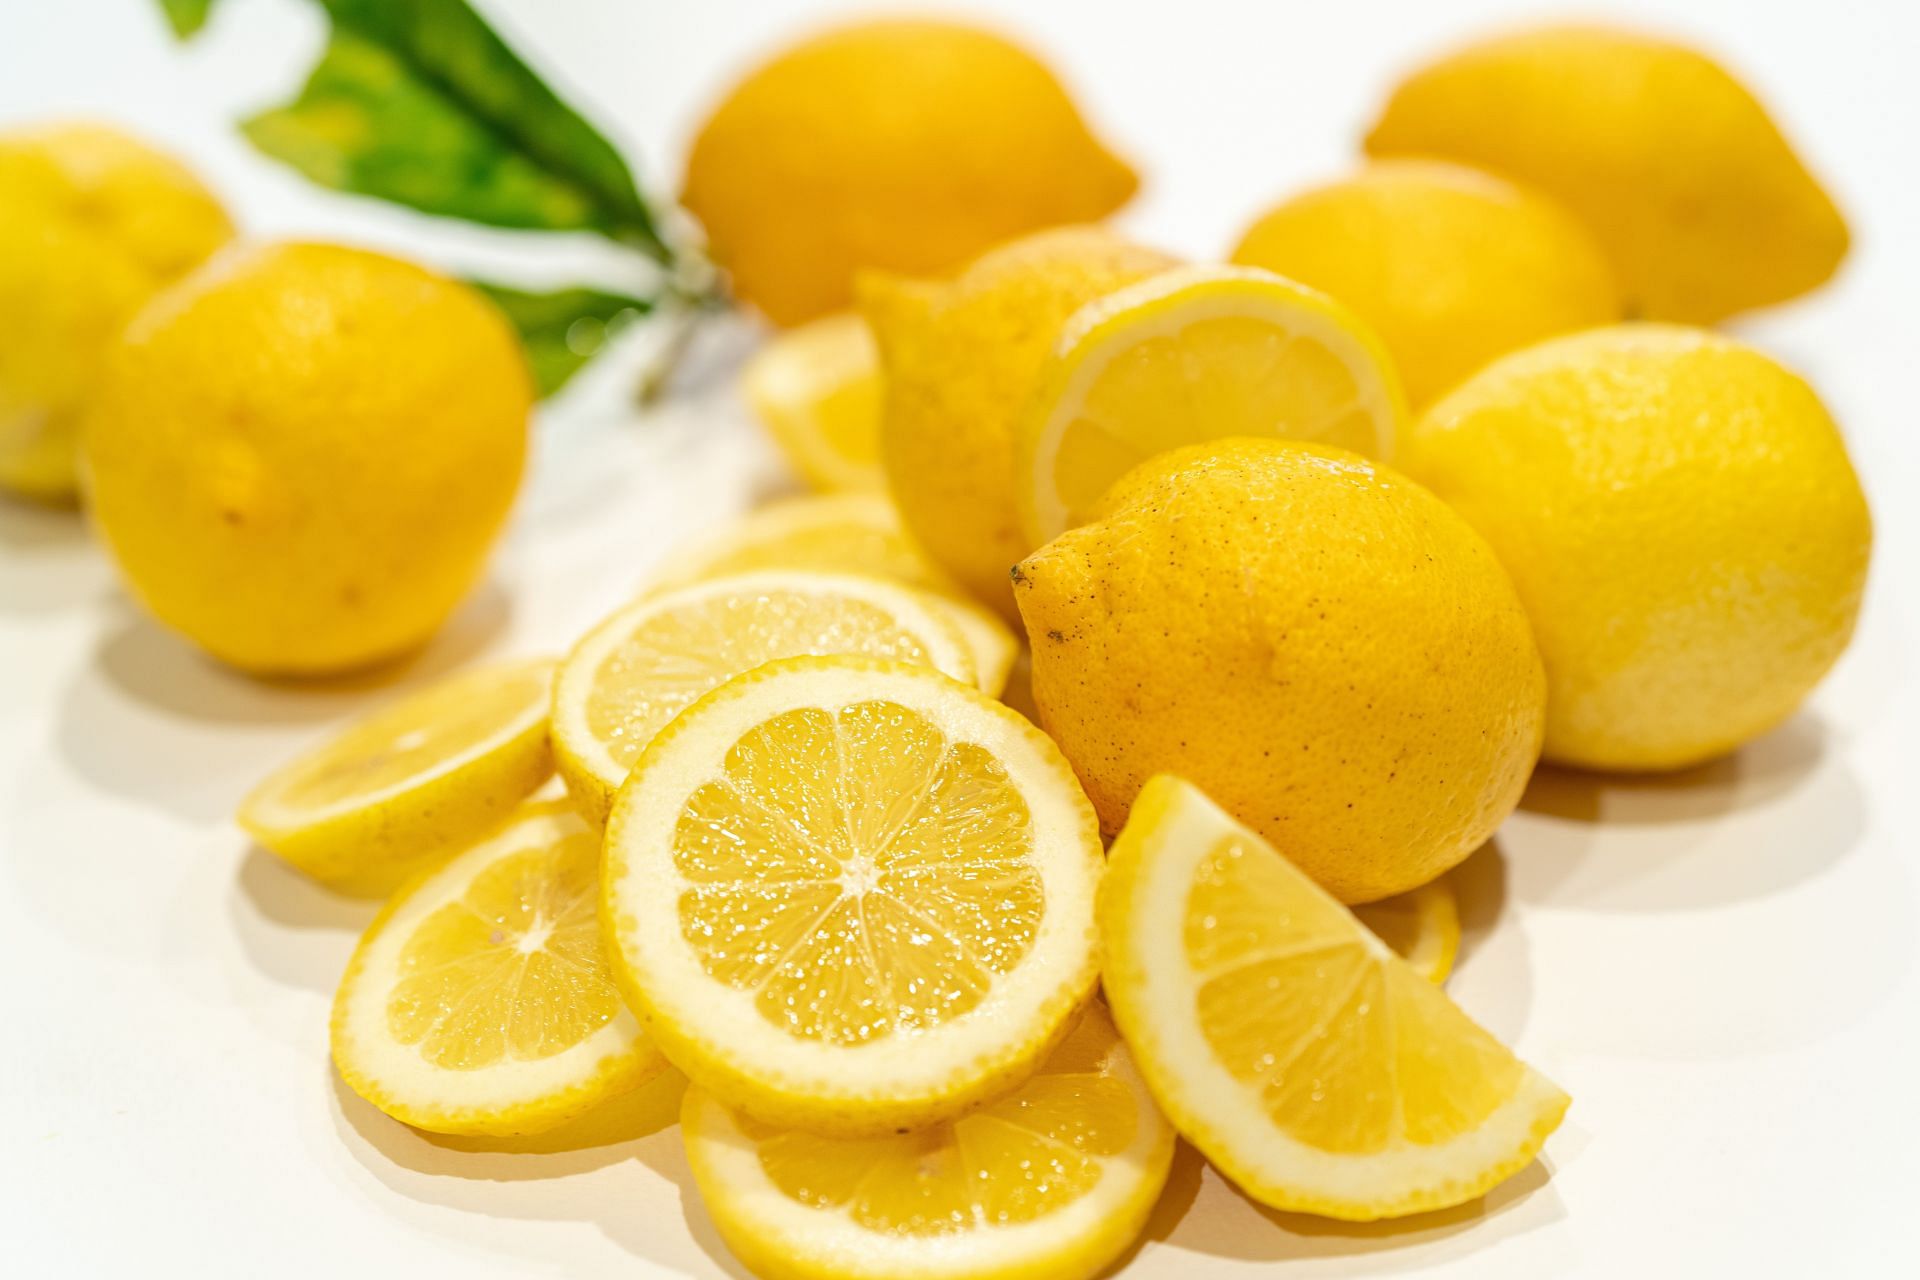 Lemons have antioxidants (Image by Unsplash/eggbank)